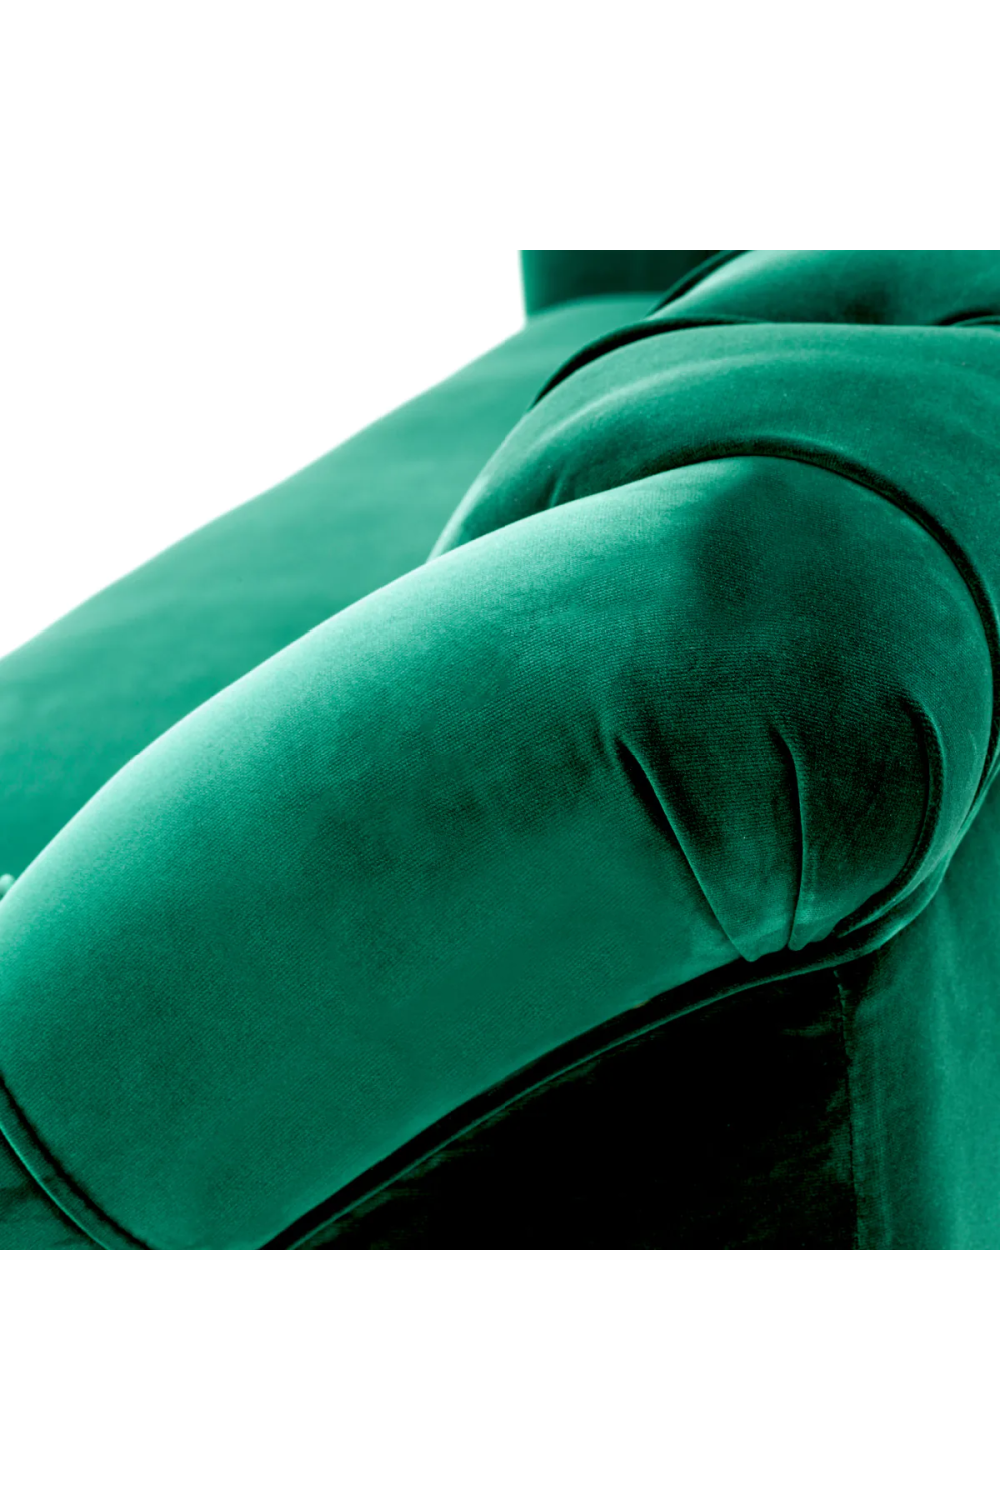 Green Tufted Sofa | Eichholtz Brian | Oroa.com